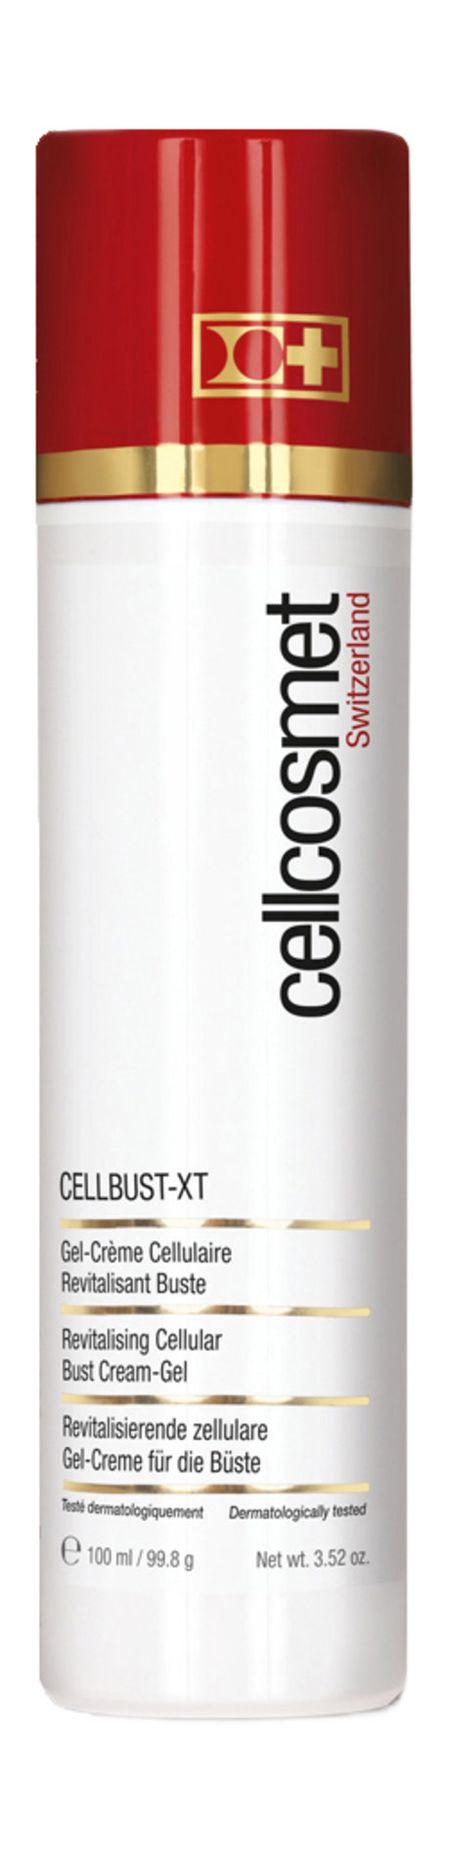 cellcosmet & cellmen cellbust-xt-a revitalising cellular bust cream-gel